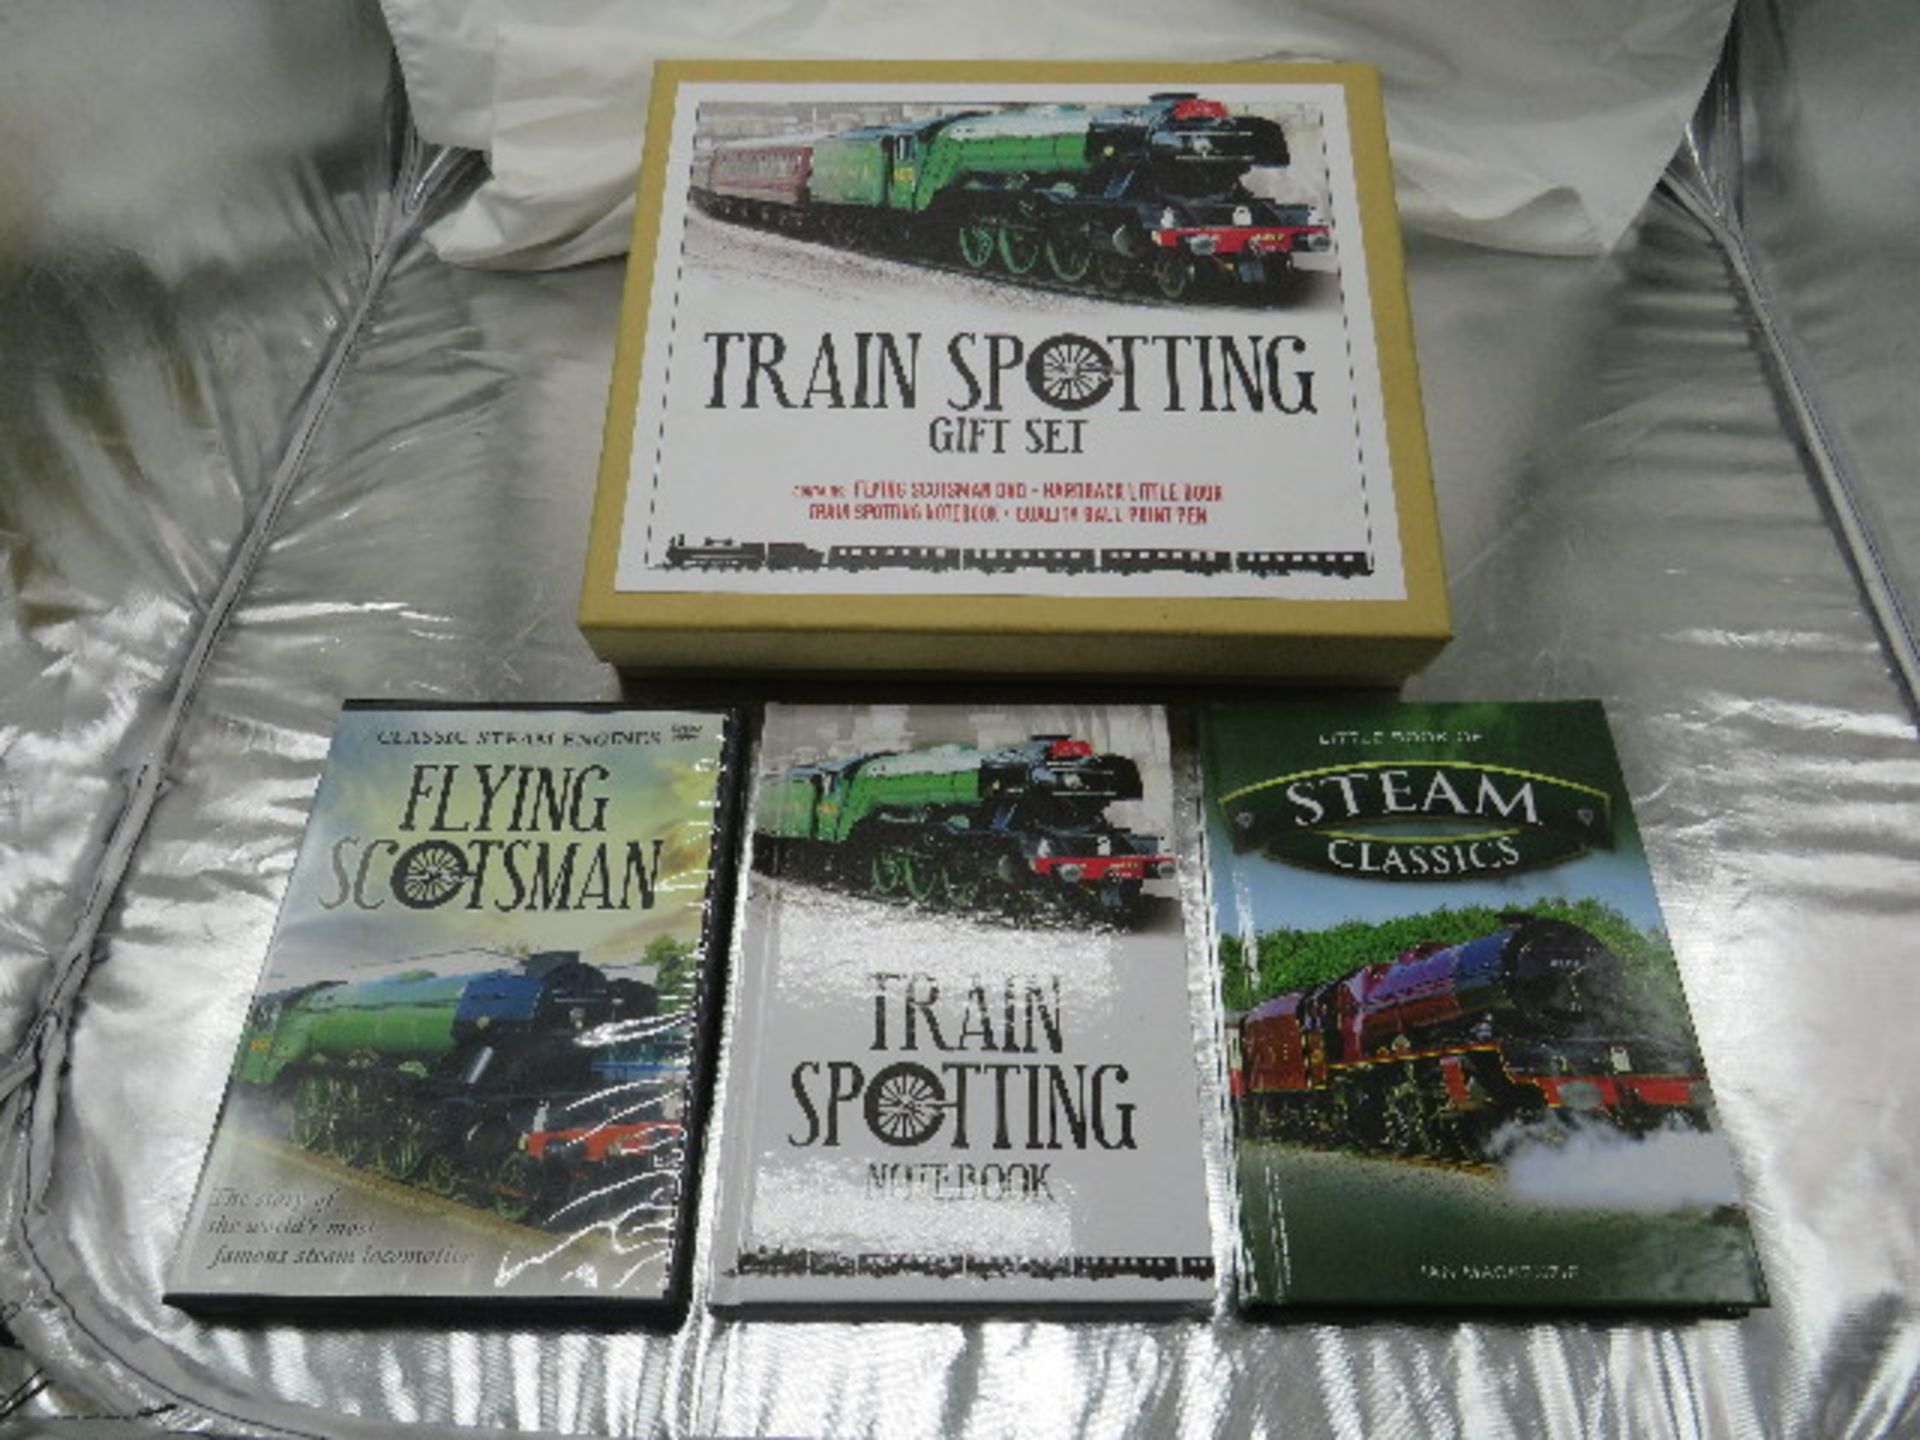 Trainspotting - 4-Piece Gift Set ( Flying Scotsman DVD / Hardback Little Book / Trainspotting